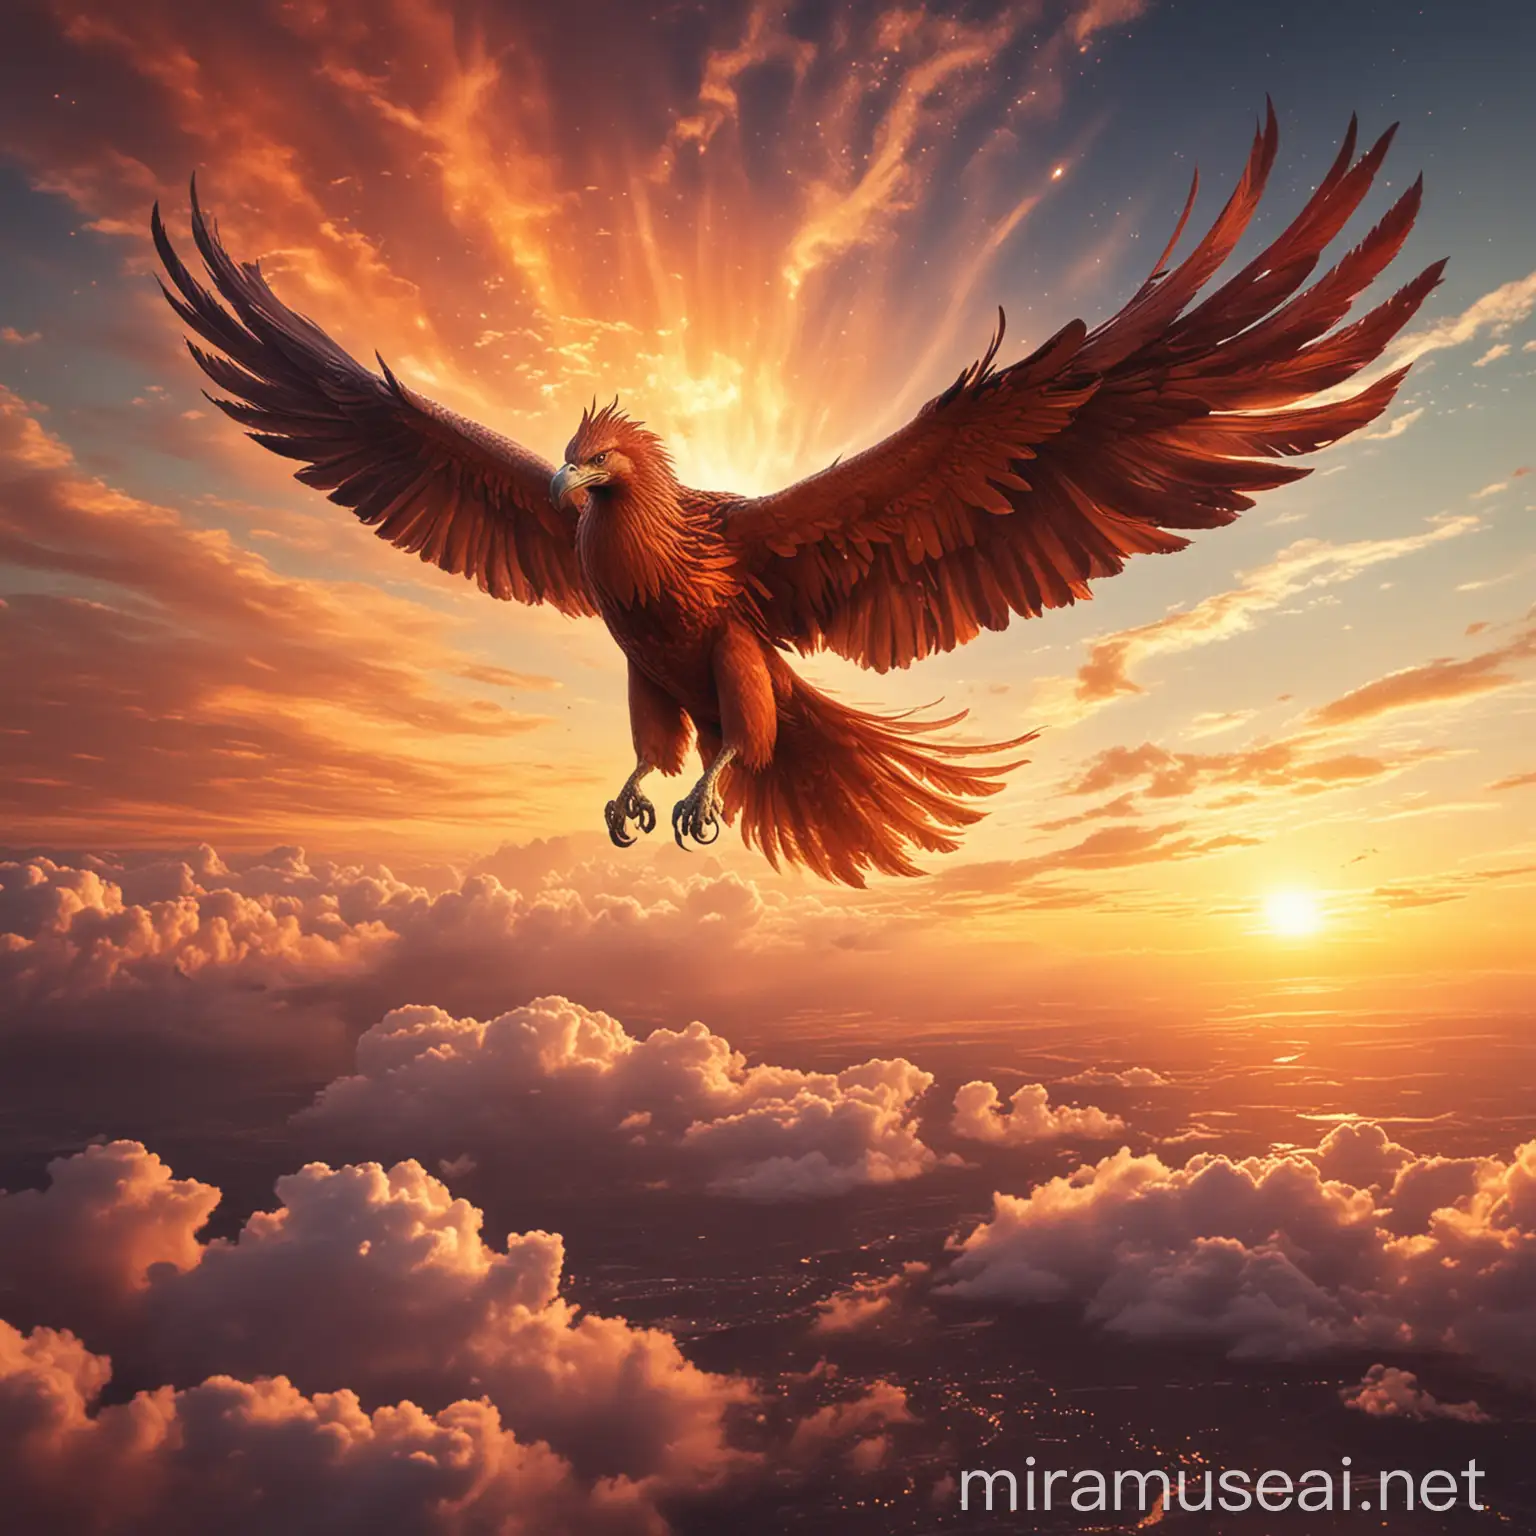 Majestic Phoenix Soaring Through the Skies